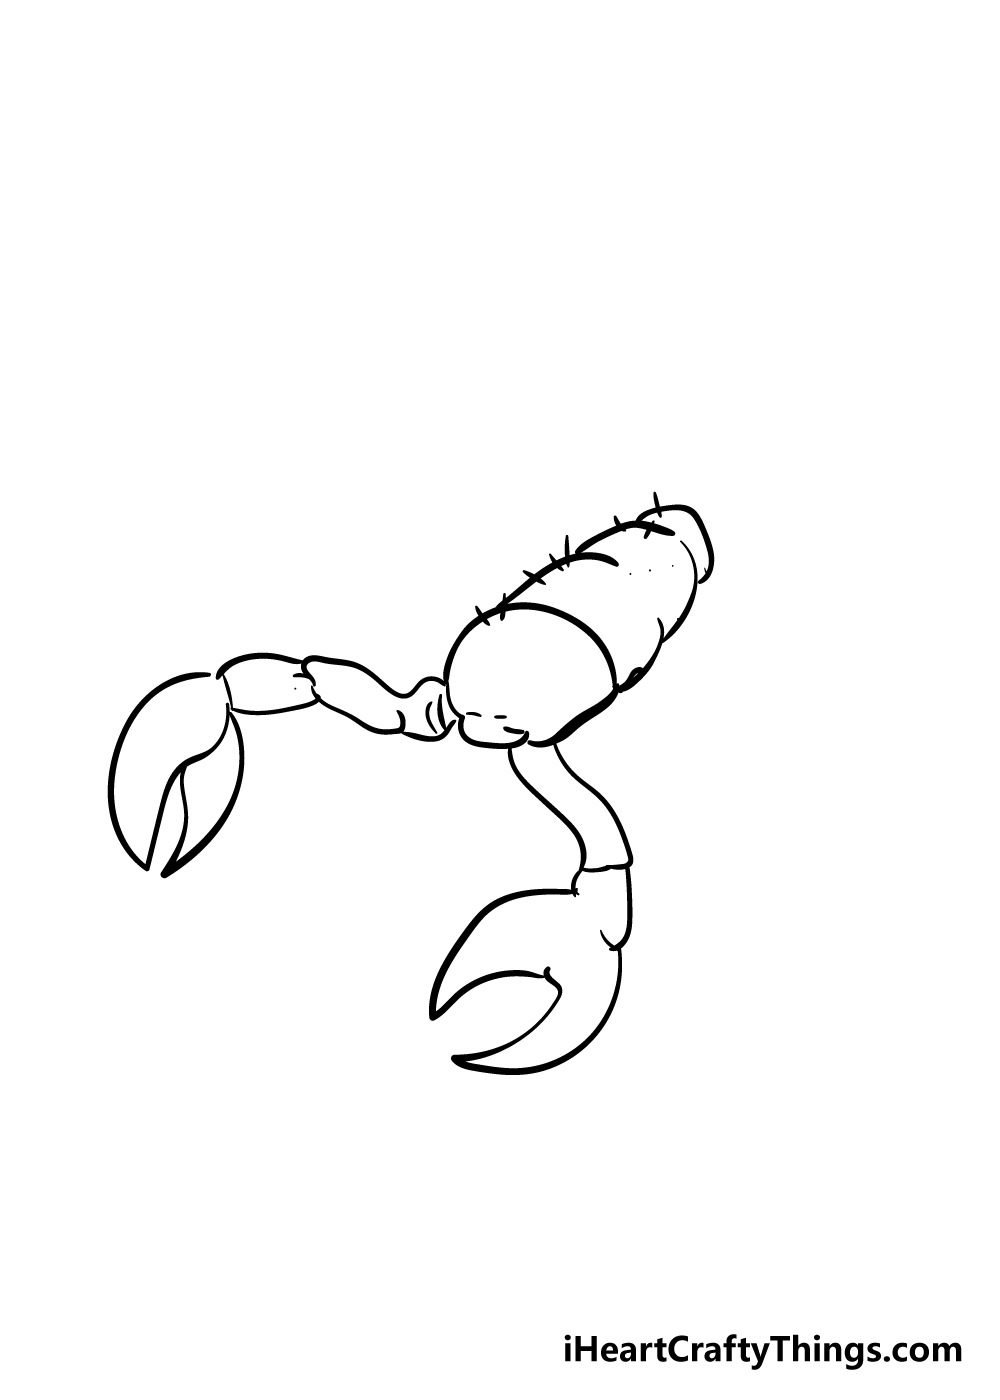 scorpion drawing step 3